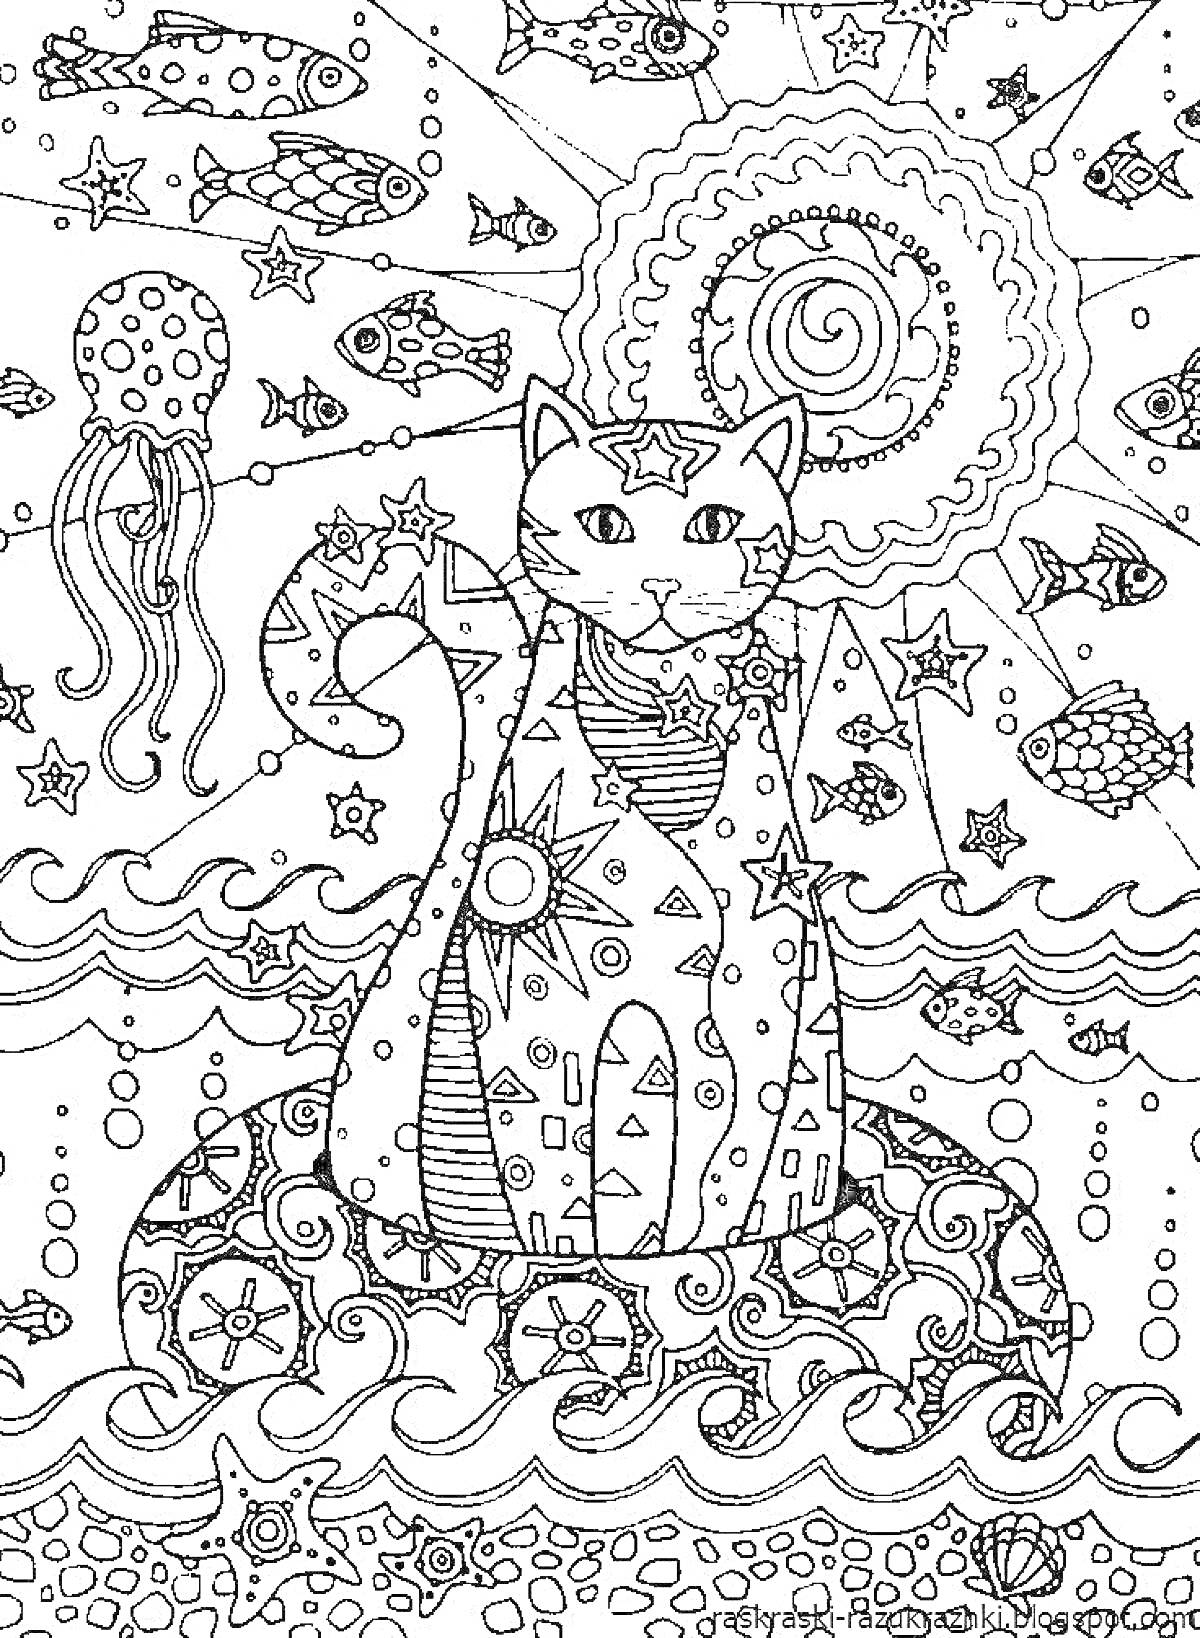 Раскраска Кошка на камне среди морских существ и звезд под солнечными лучами